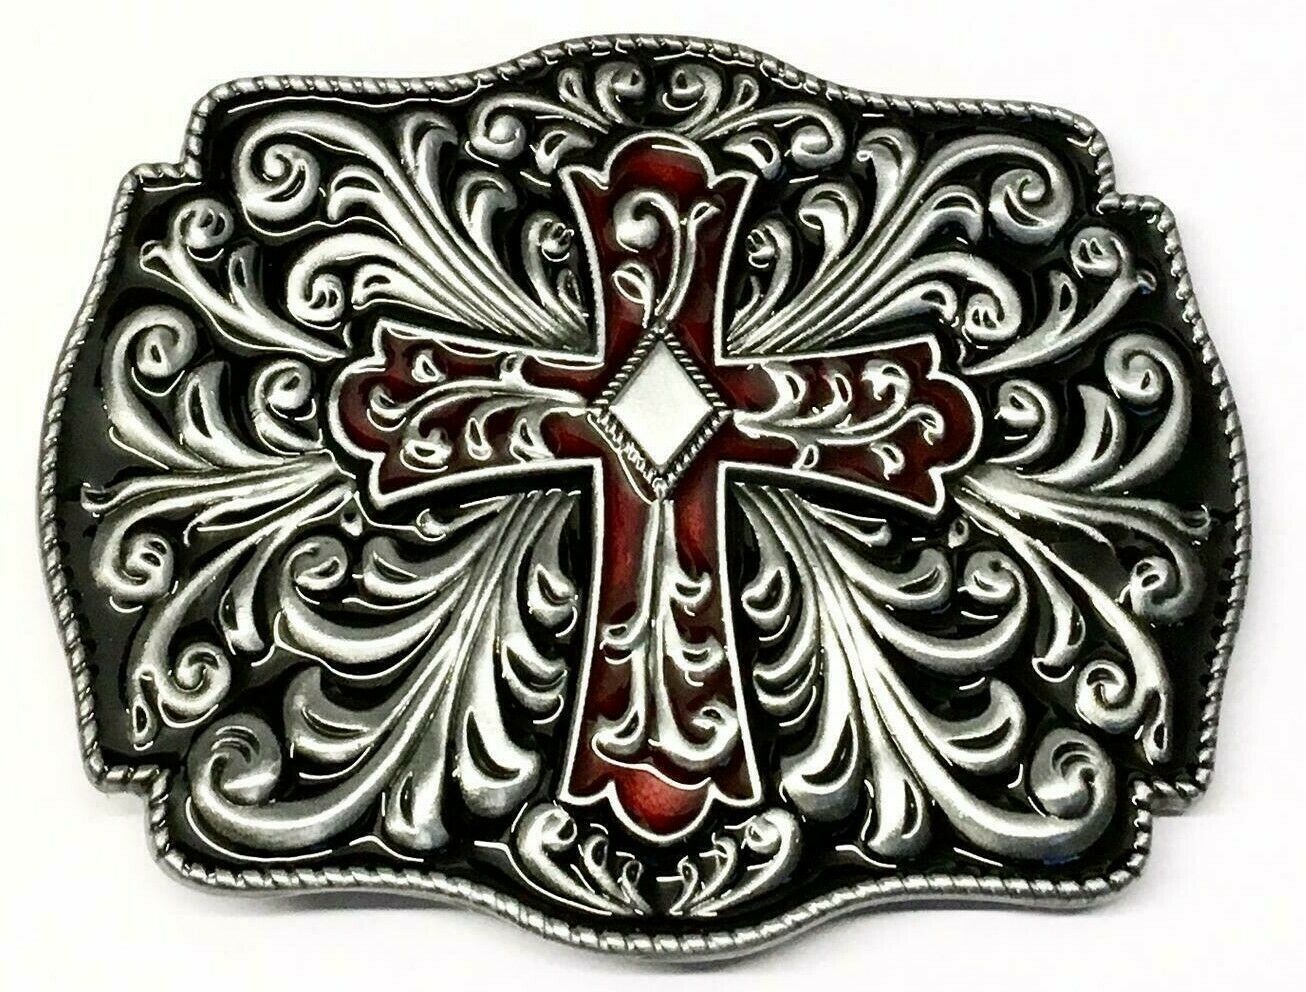 Gothic Cross Metal Belt Buckle Biker Celtic Pagan Viking Heraldic Norse